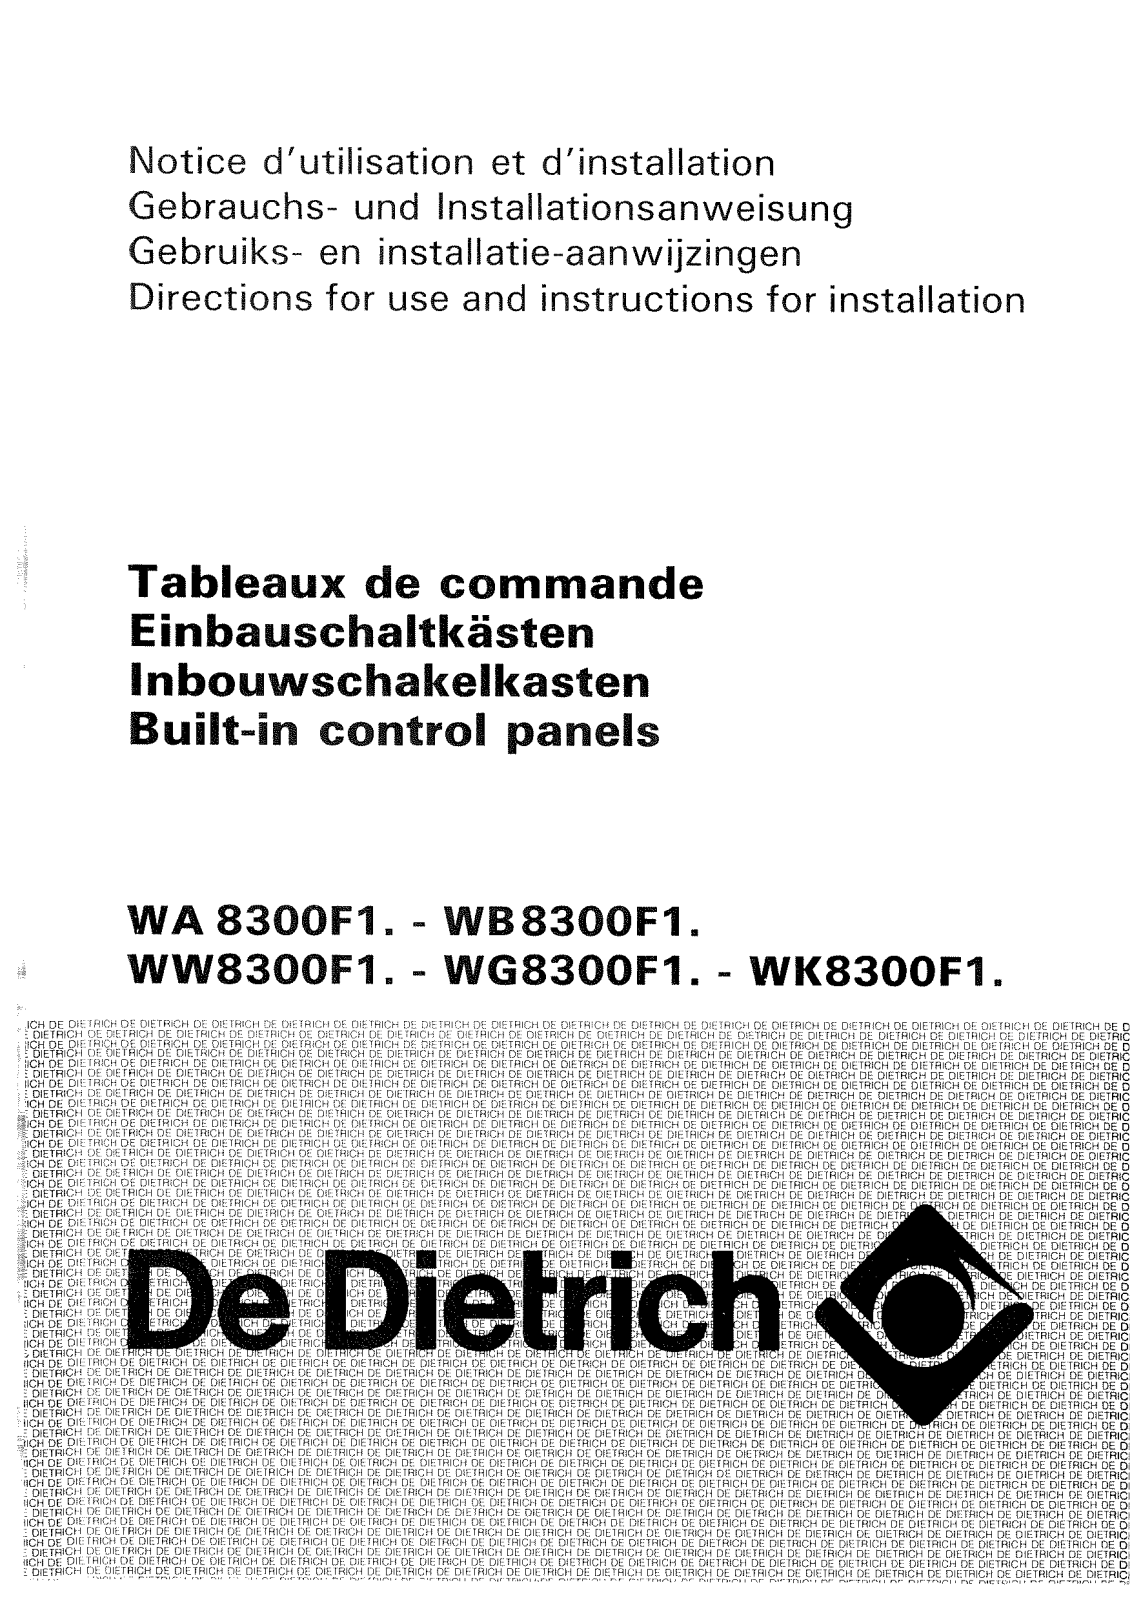 De dietrich WG8300F1, WK8300F1, WW8300F1, WB8300F1 User Manual